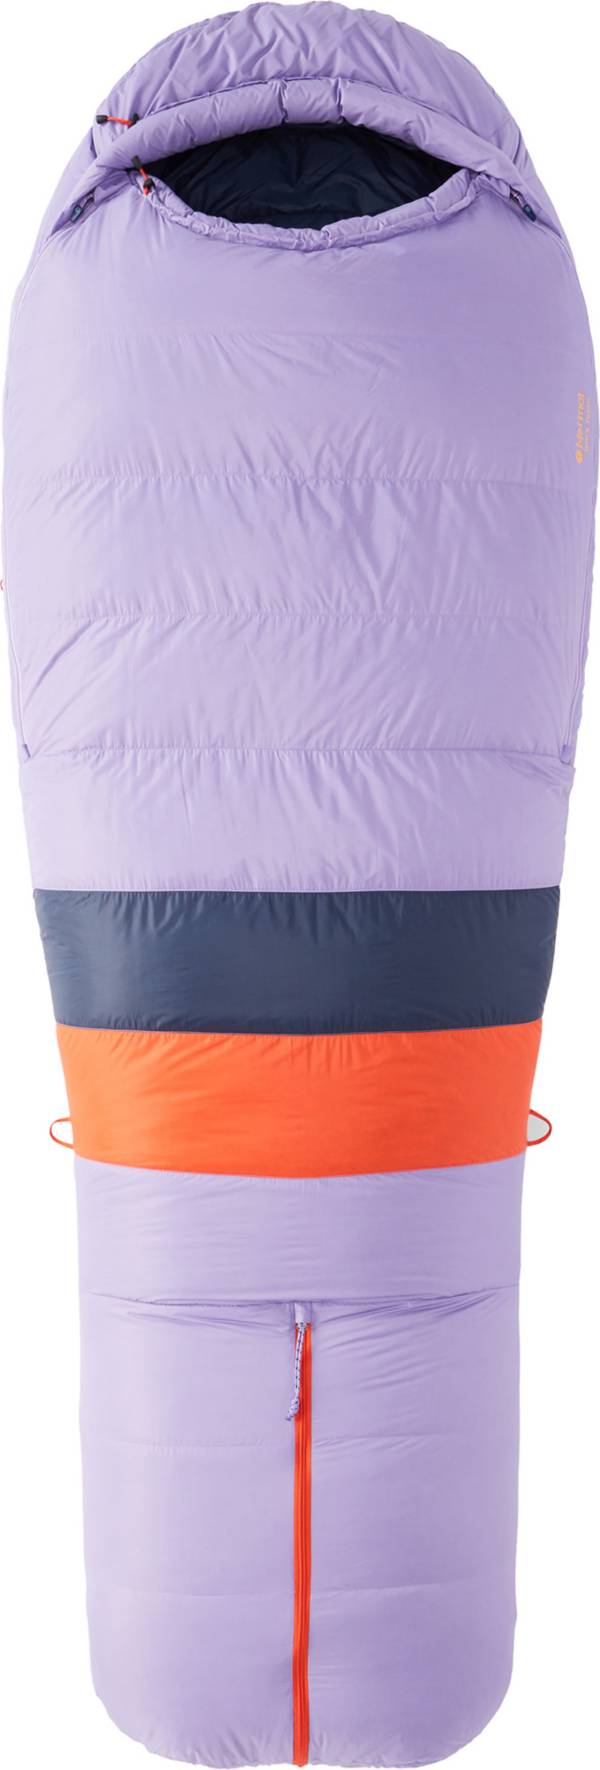 Marmot Women's Teton 15 Sleeping Bag product image